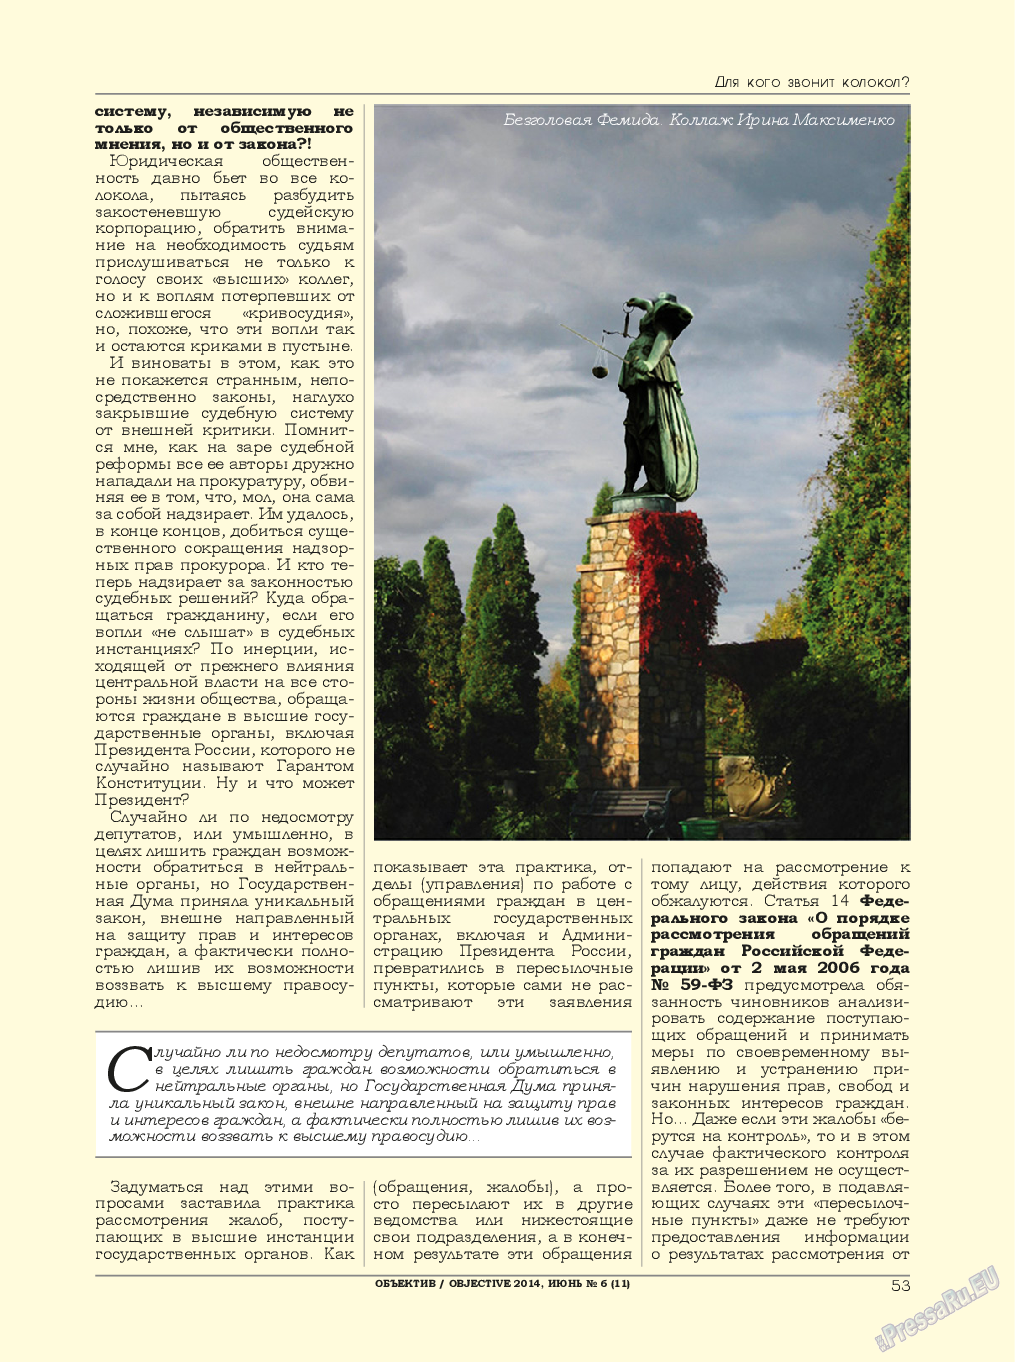 Объектив EU, журнал. 2014 №6 стр.53